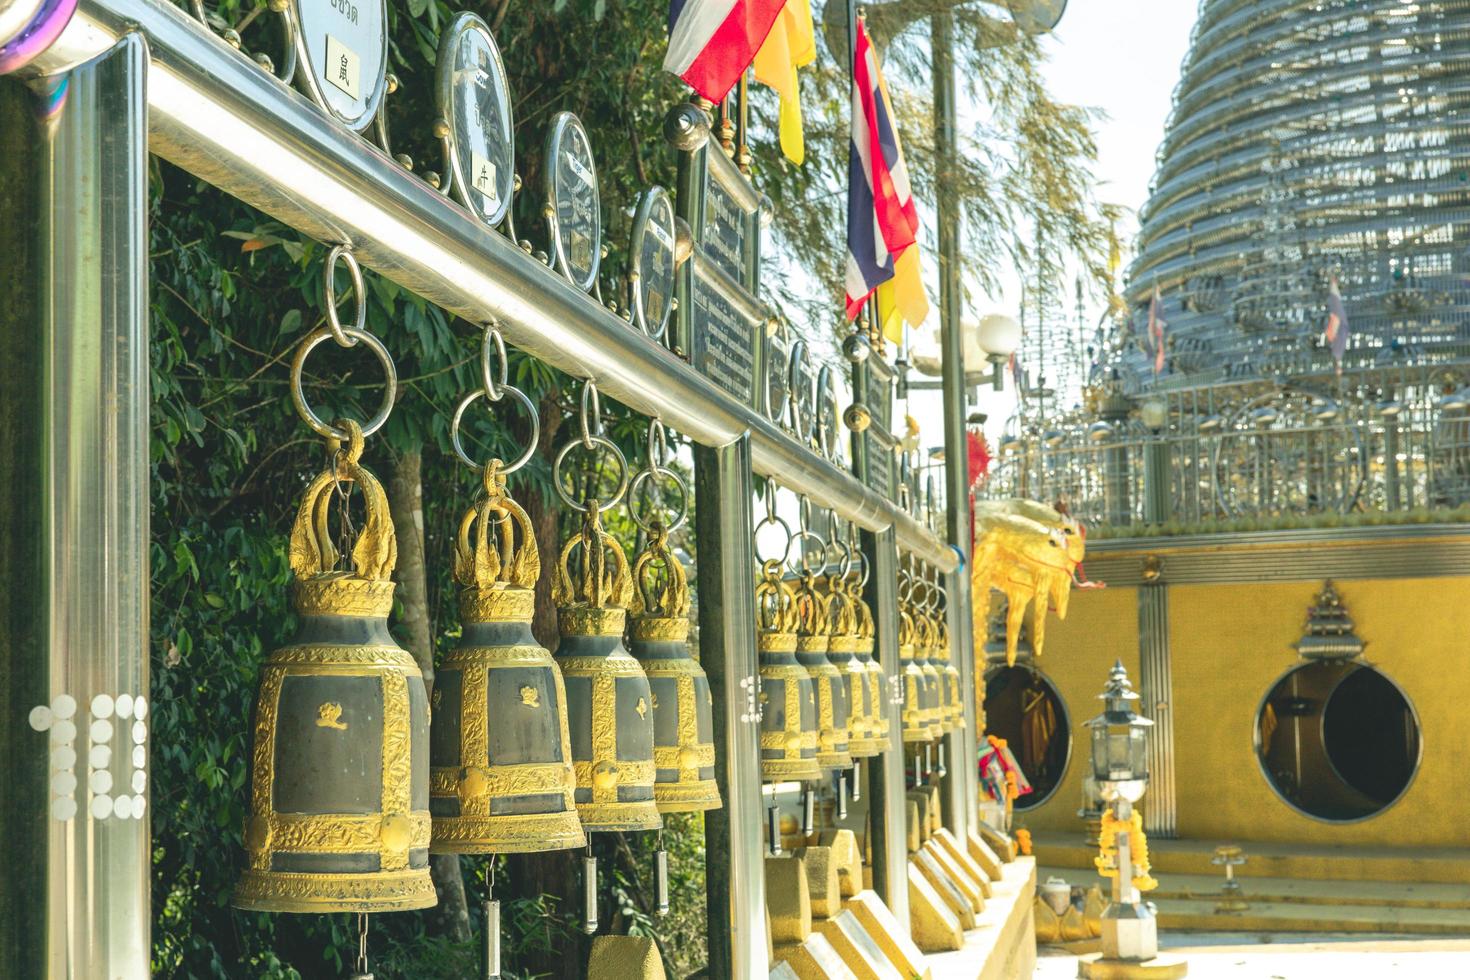 phra maha that chedi triphop tri mongkhon, hat yai, thailand - februari 2022 - atmosfär inne i religiösa turistattraktioner på maha chedi tripob trimongkol med stor pagod i rostfritt stål. foto